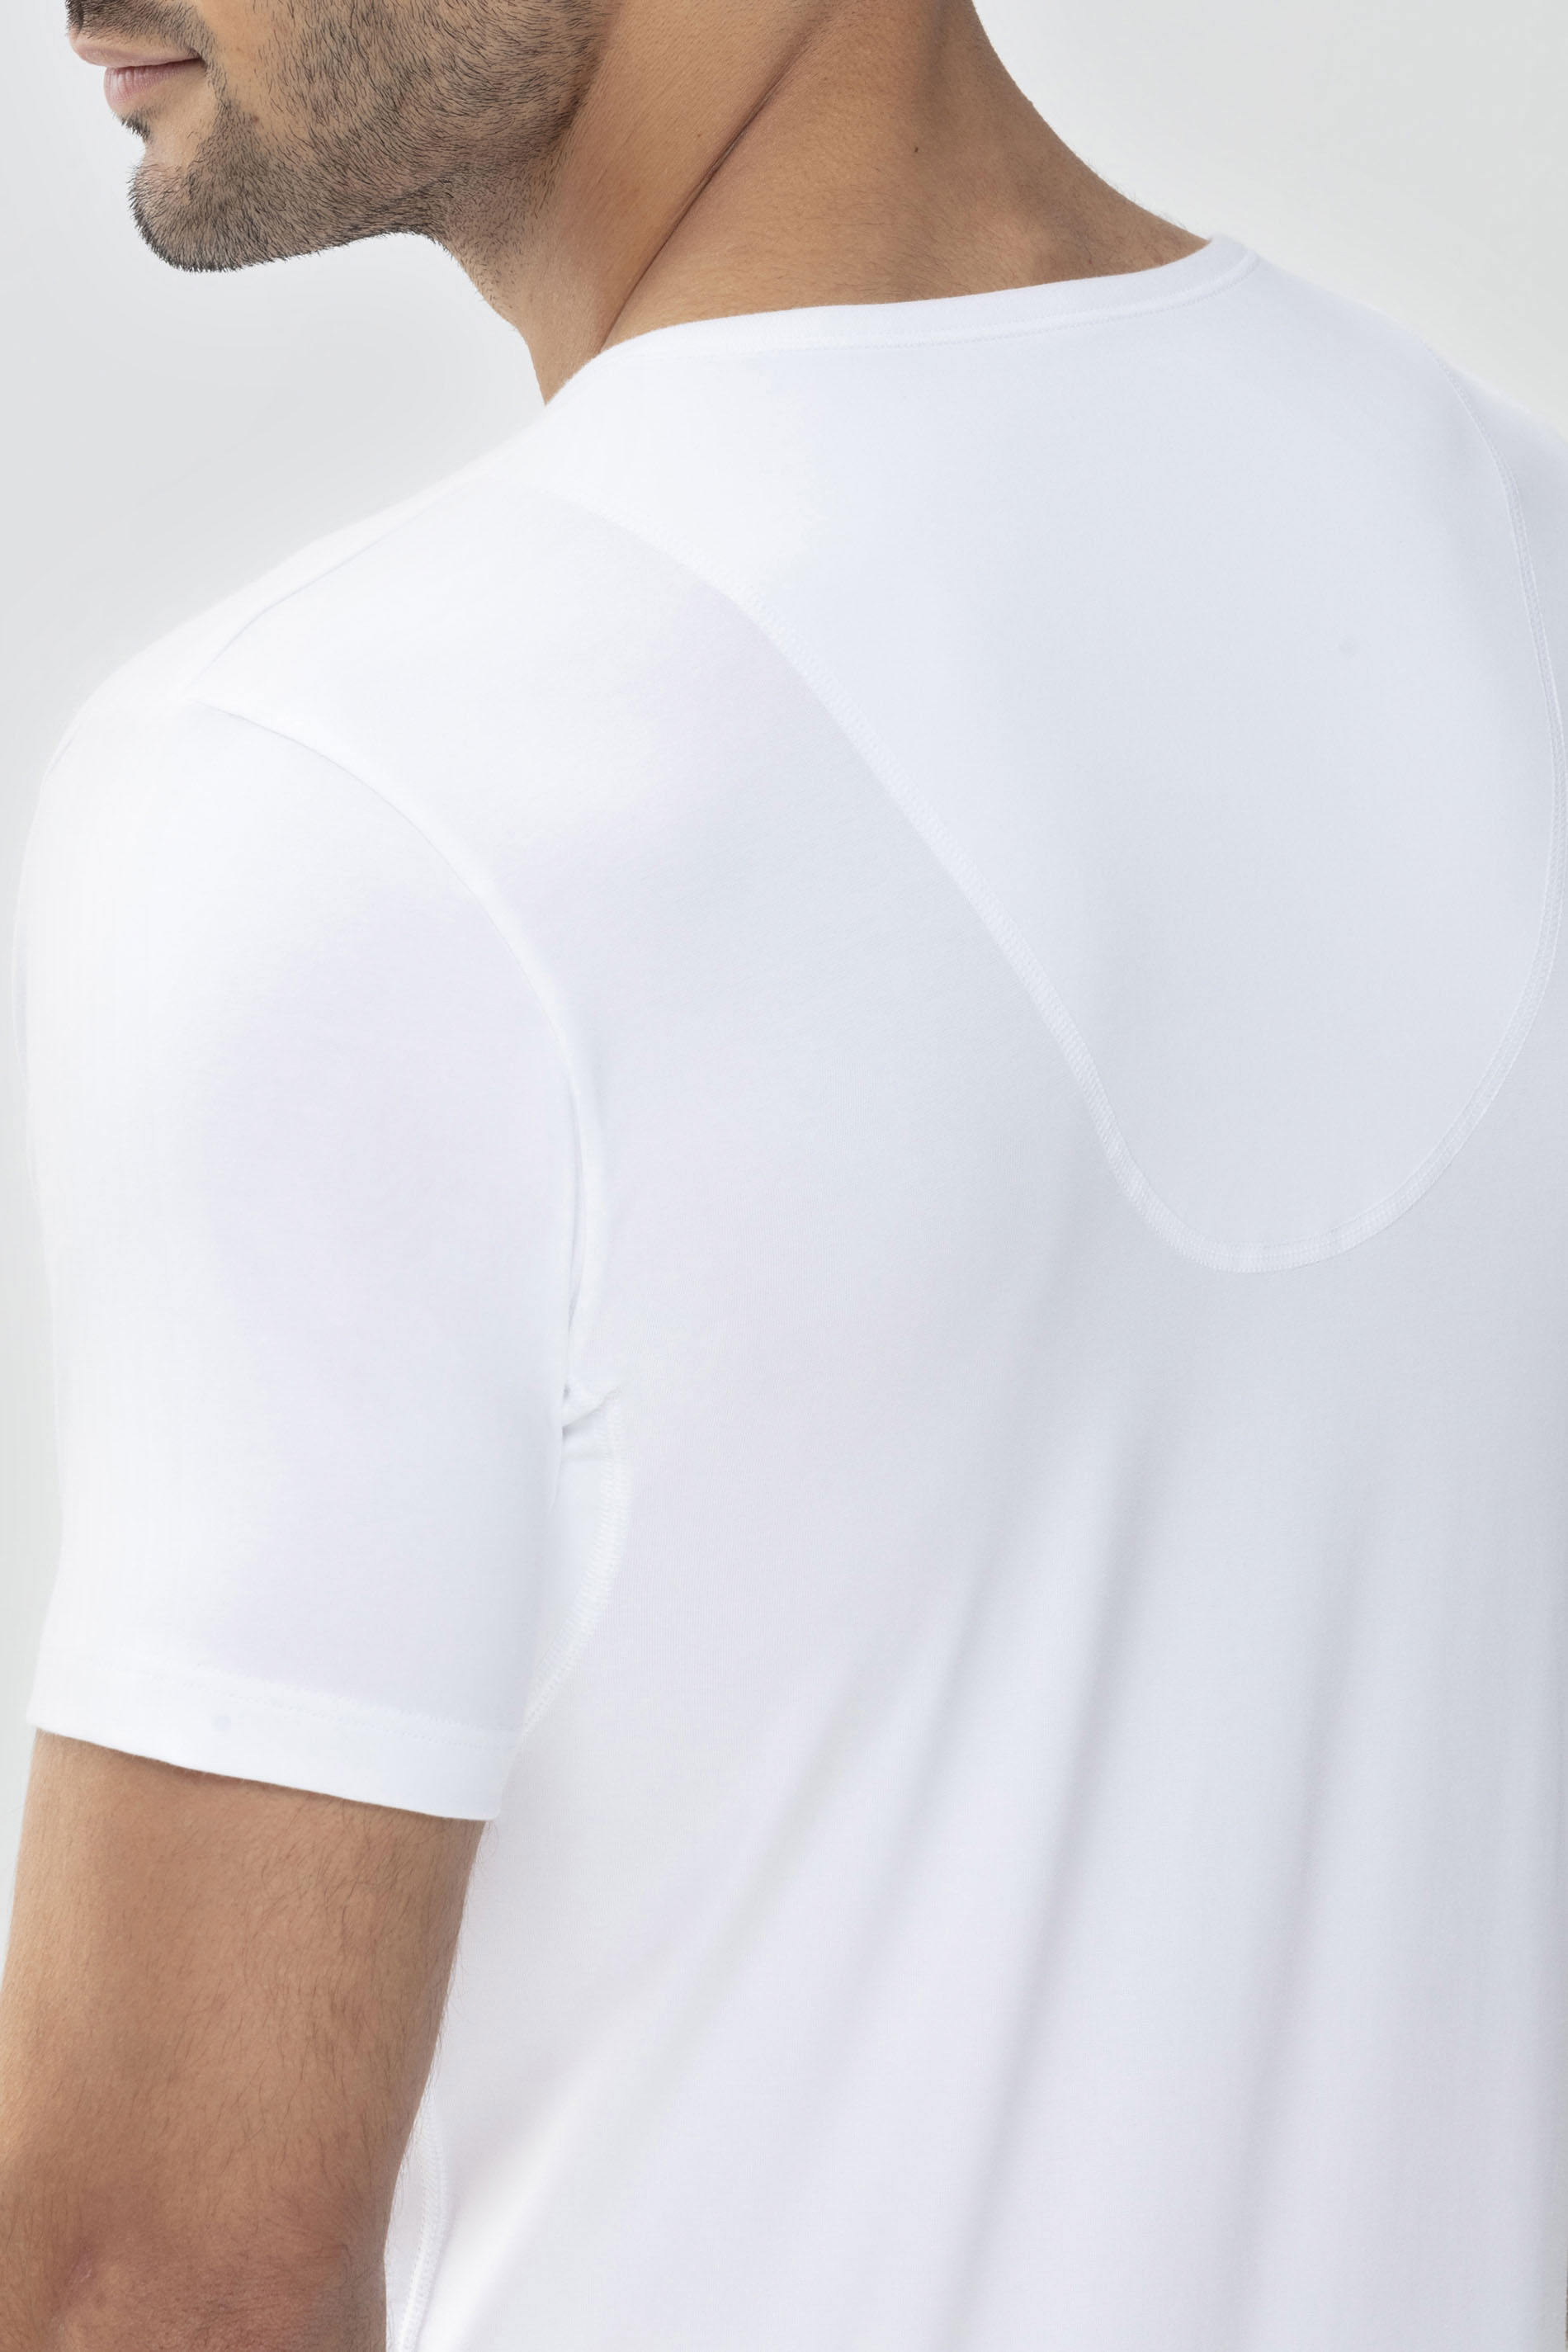 Das Drunterhemd - V-Neck White Serie Dry Cotton Functional  Detail View 01 | mey®